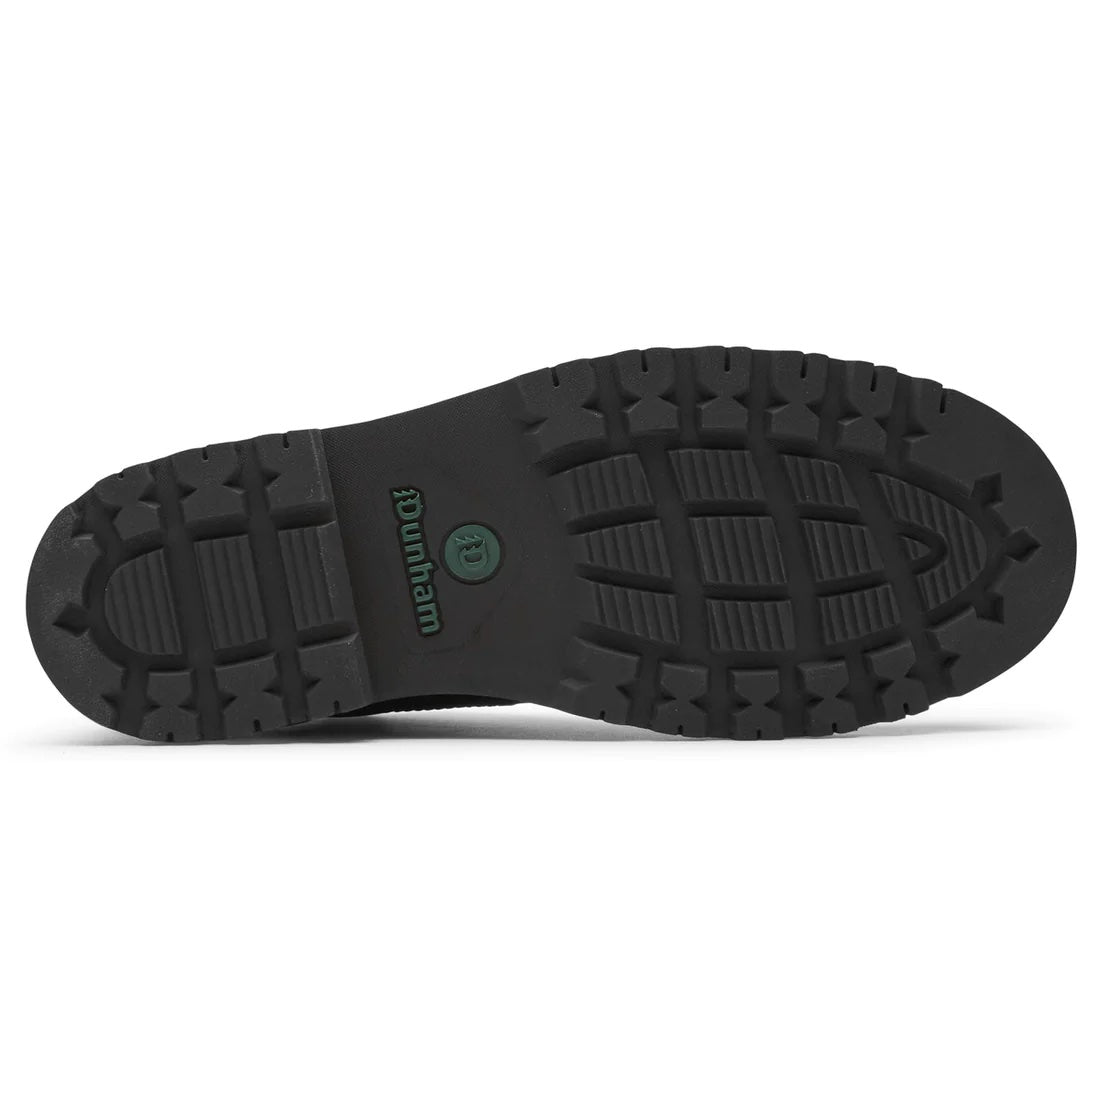 Byrne Waterproof Chukka Boot product image